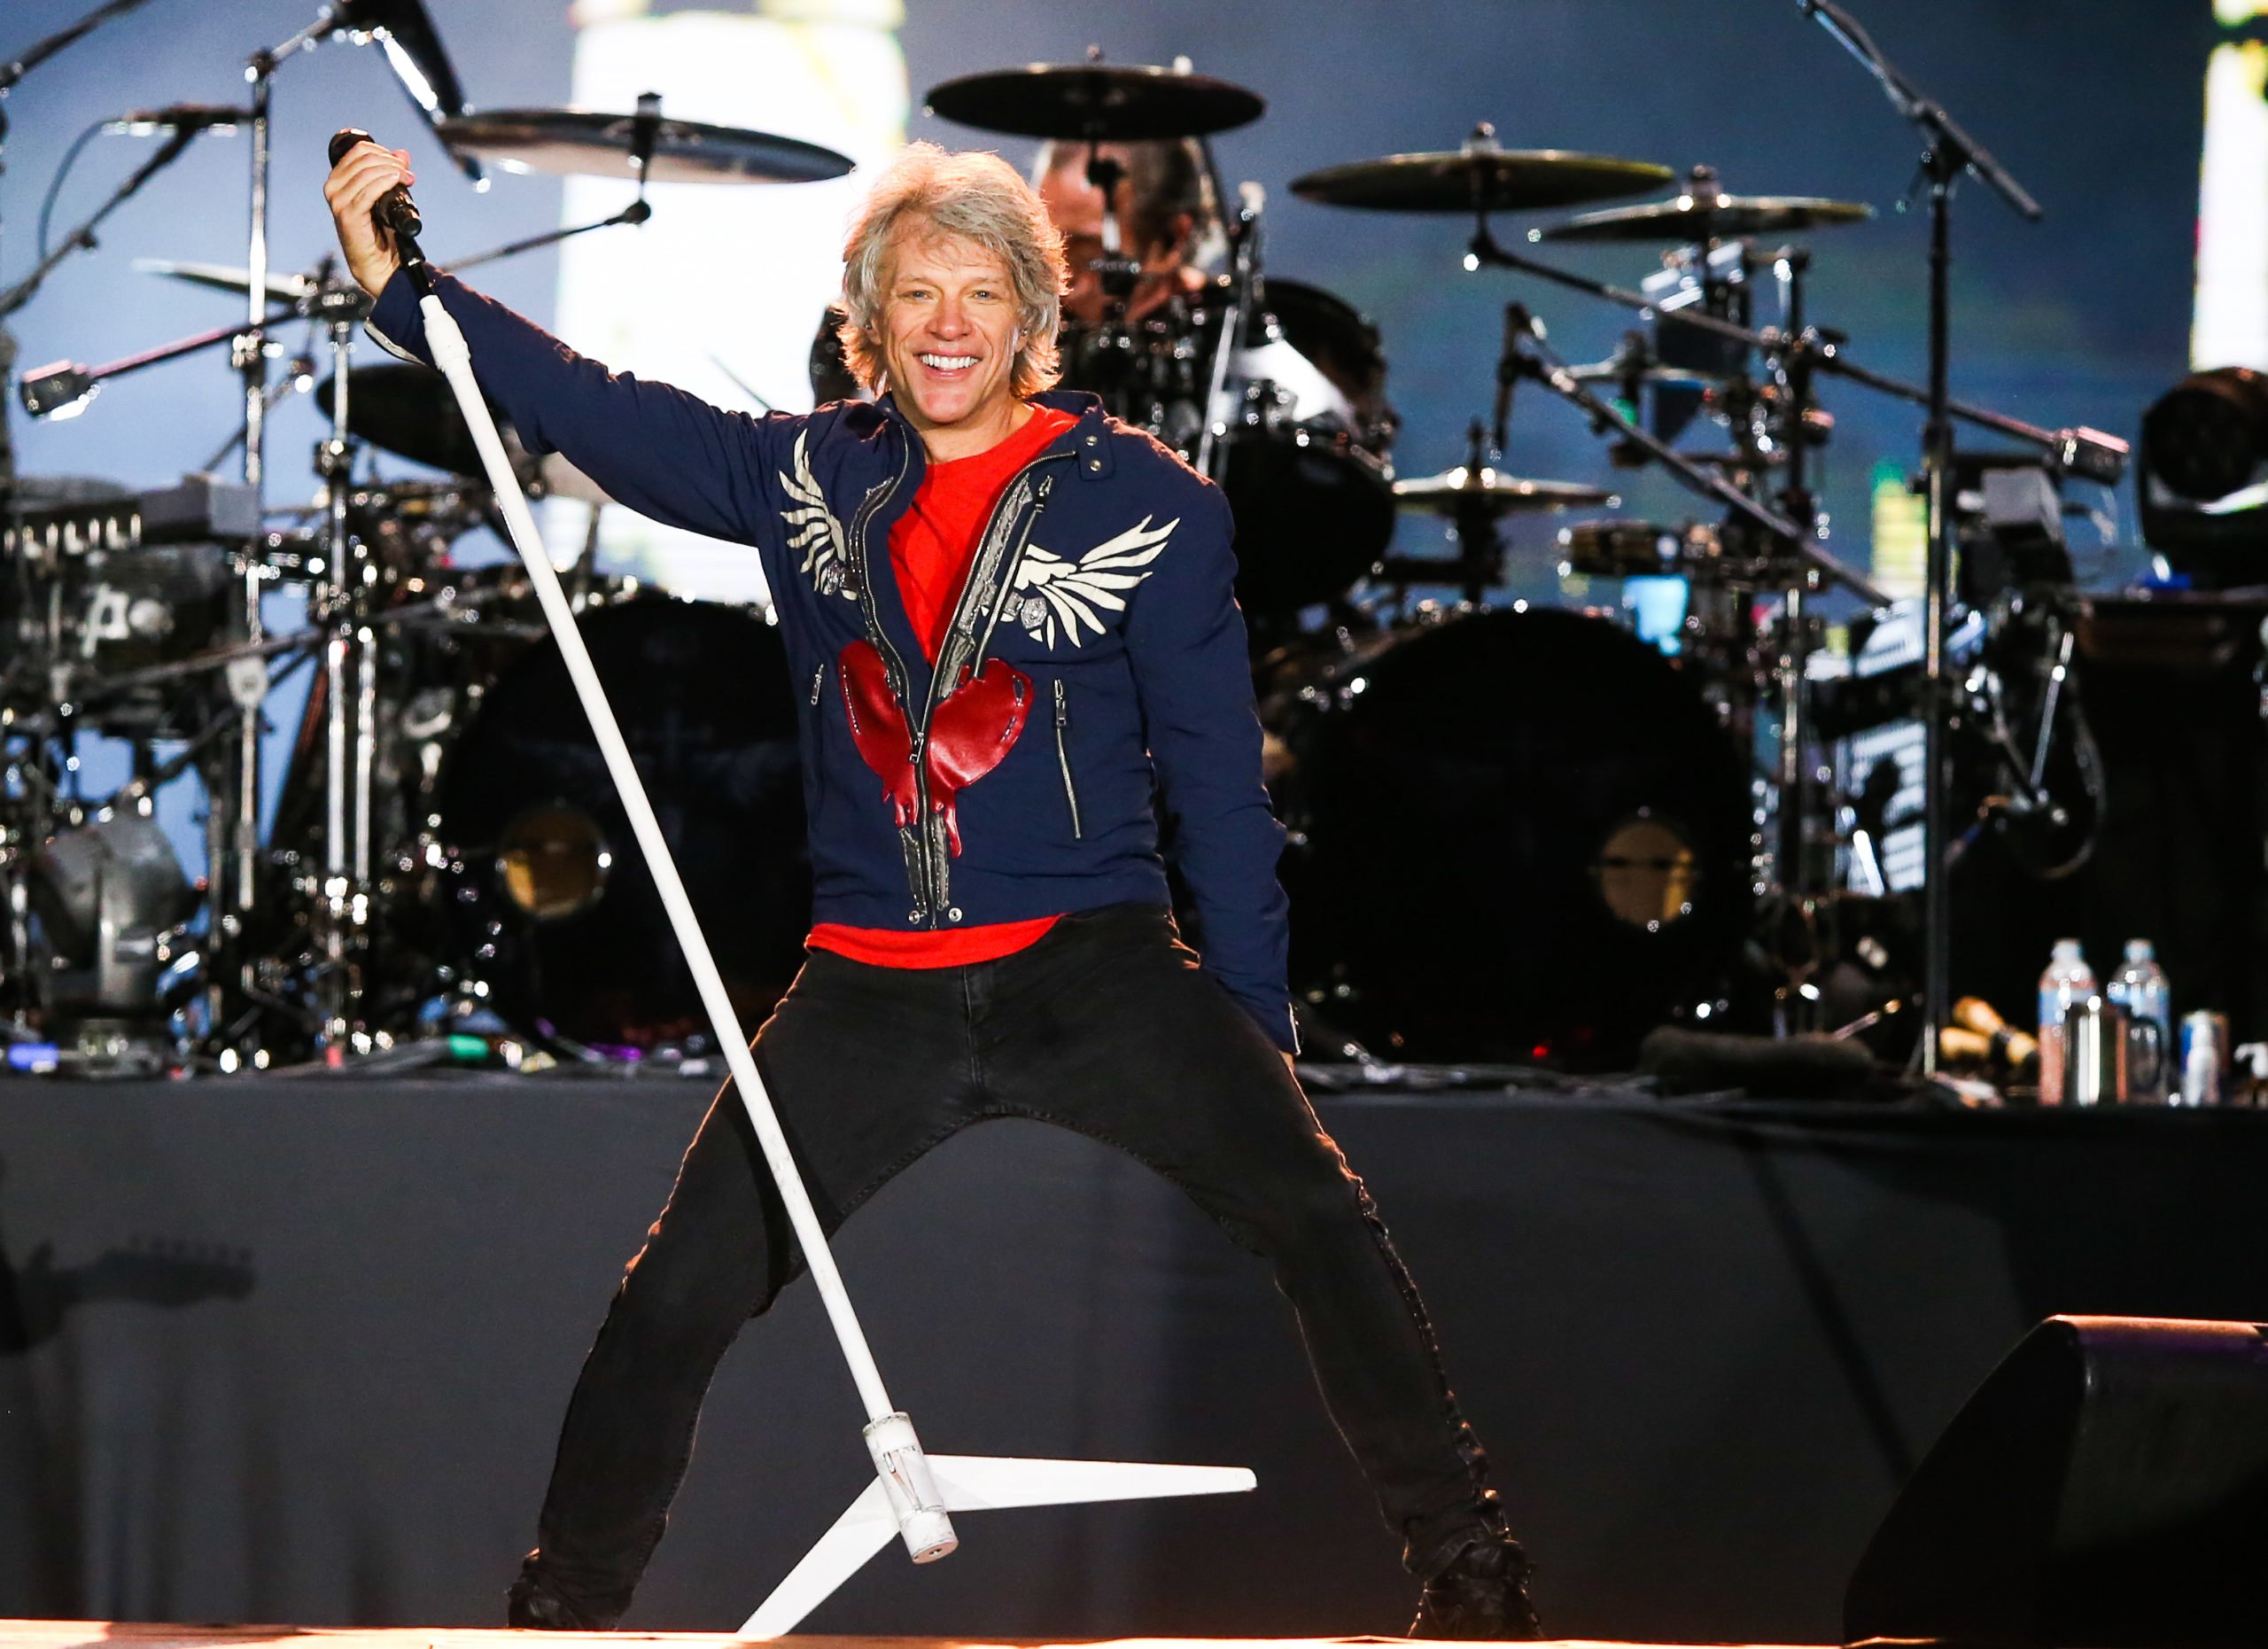 RIO DE JANEIRO, BRAZIL - SEPTEMBER 29: Jon Bon Jovi of the band Bon Jovi performs on stage during Rock In Rio day 3 at Cidade do Rock on September 29, 2019 in Rio de Janeiro, Brazil. (Photo by Alexandre Schneider/Getty Images)